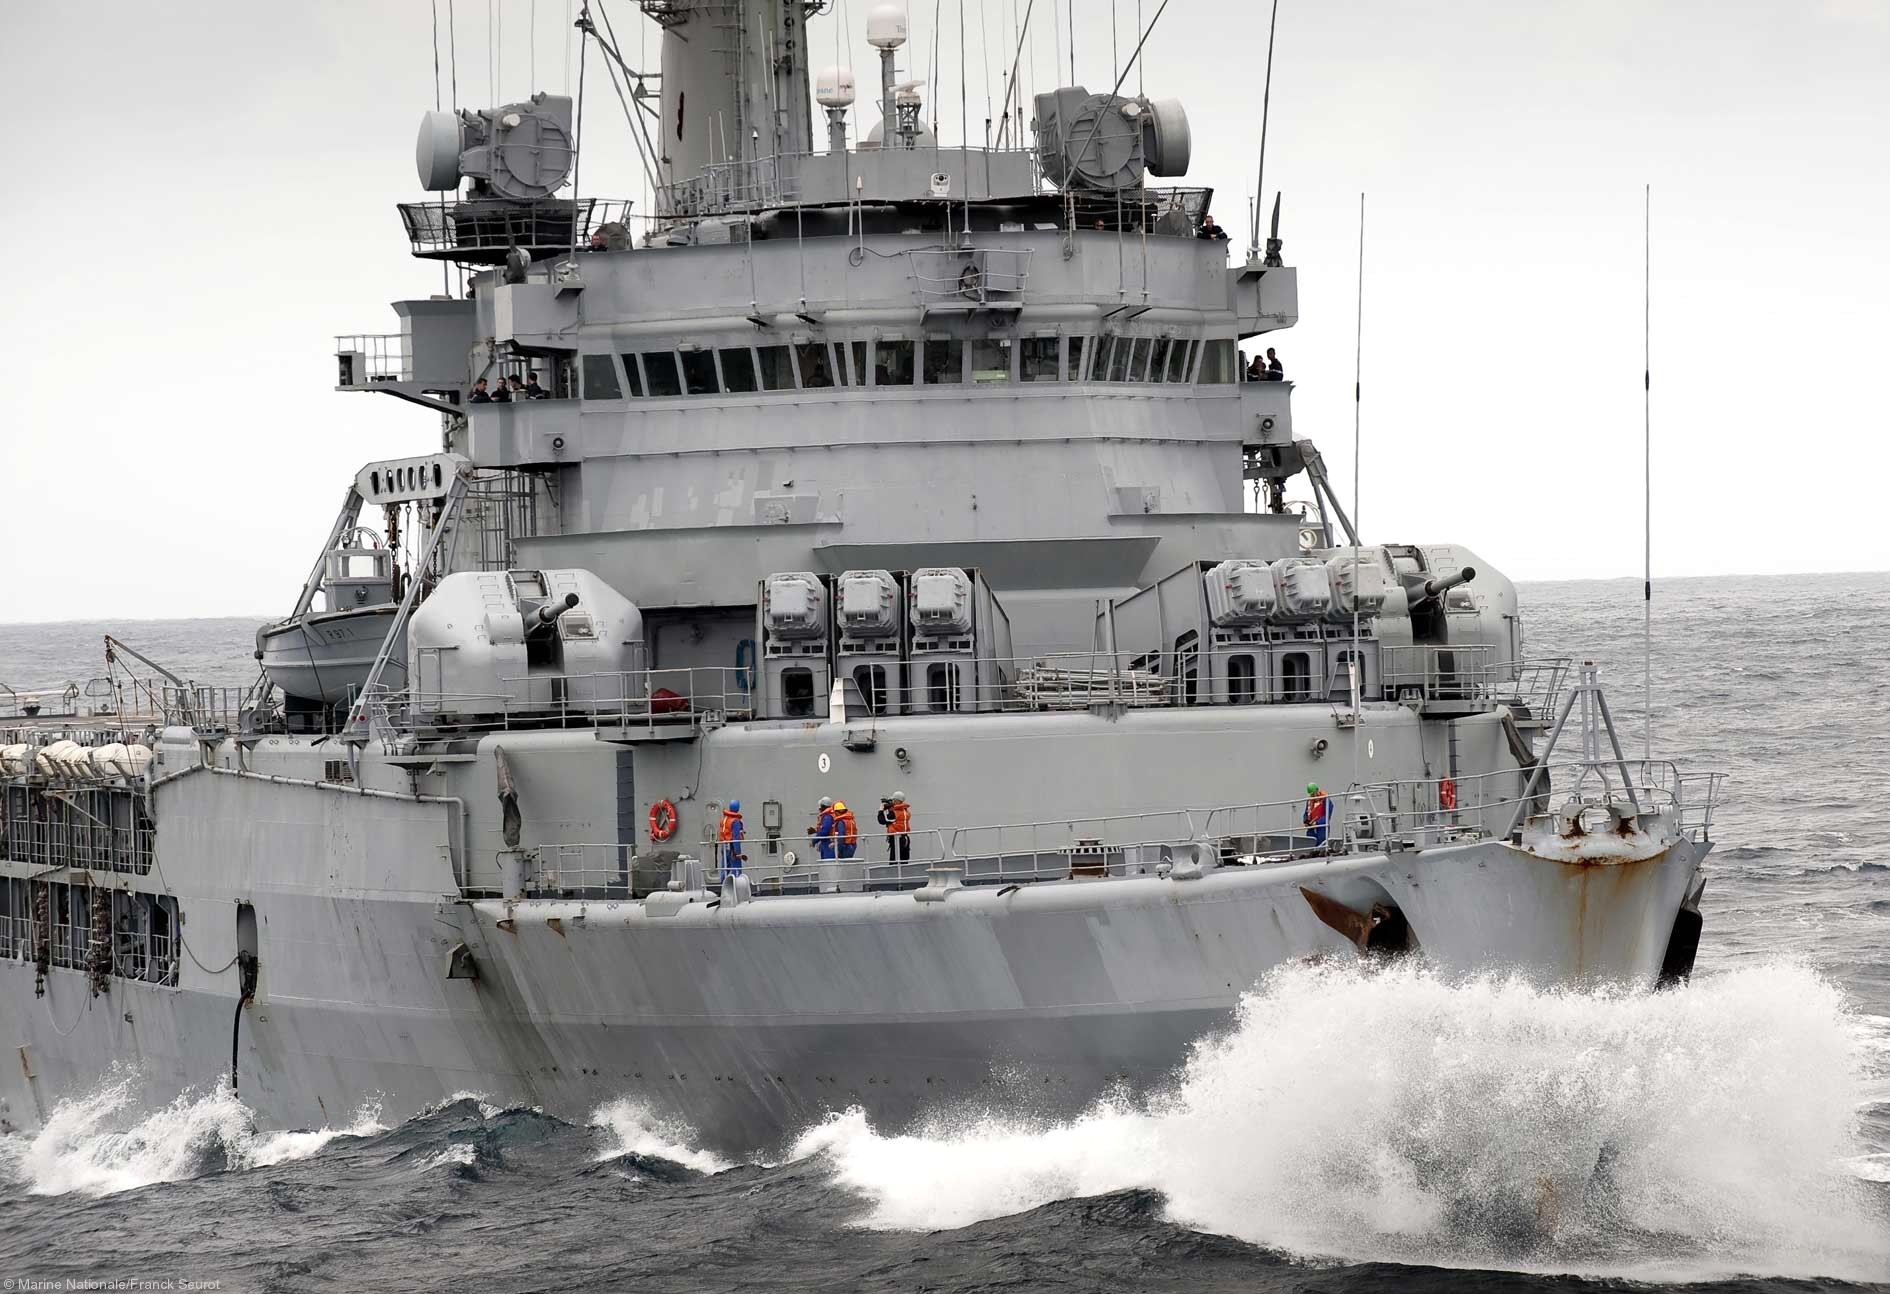 r-97 fs jeanne d'arc helicopter carrier cruiser french navy marine nationale 14 dcn giat 100mm gun mm38 exocet ssm